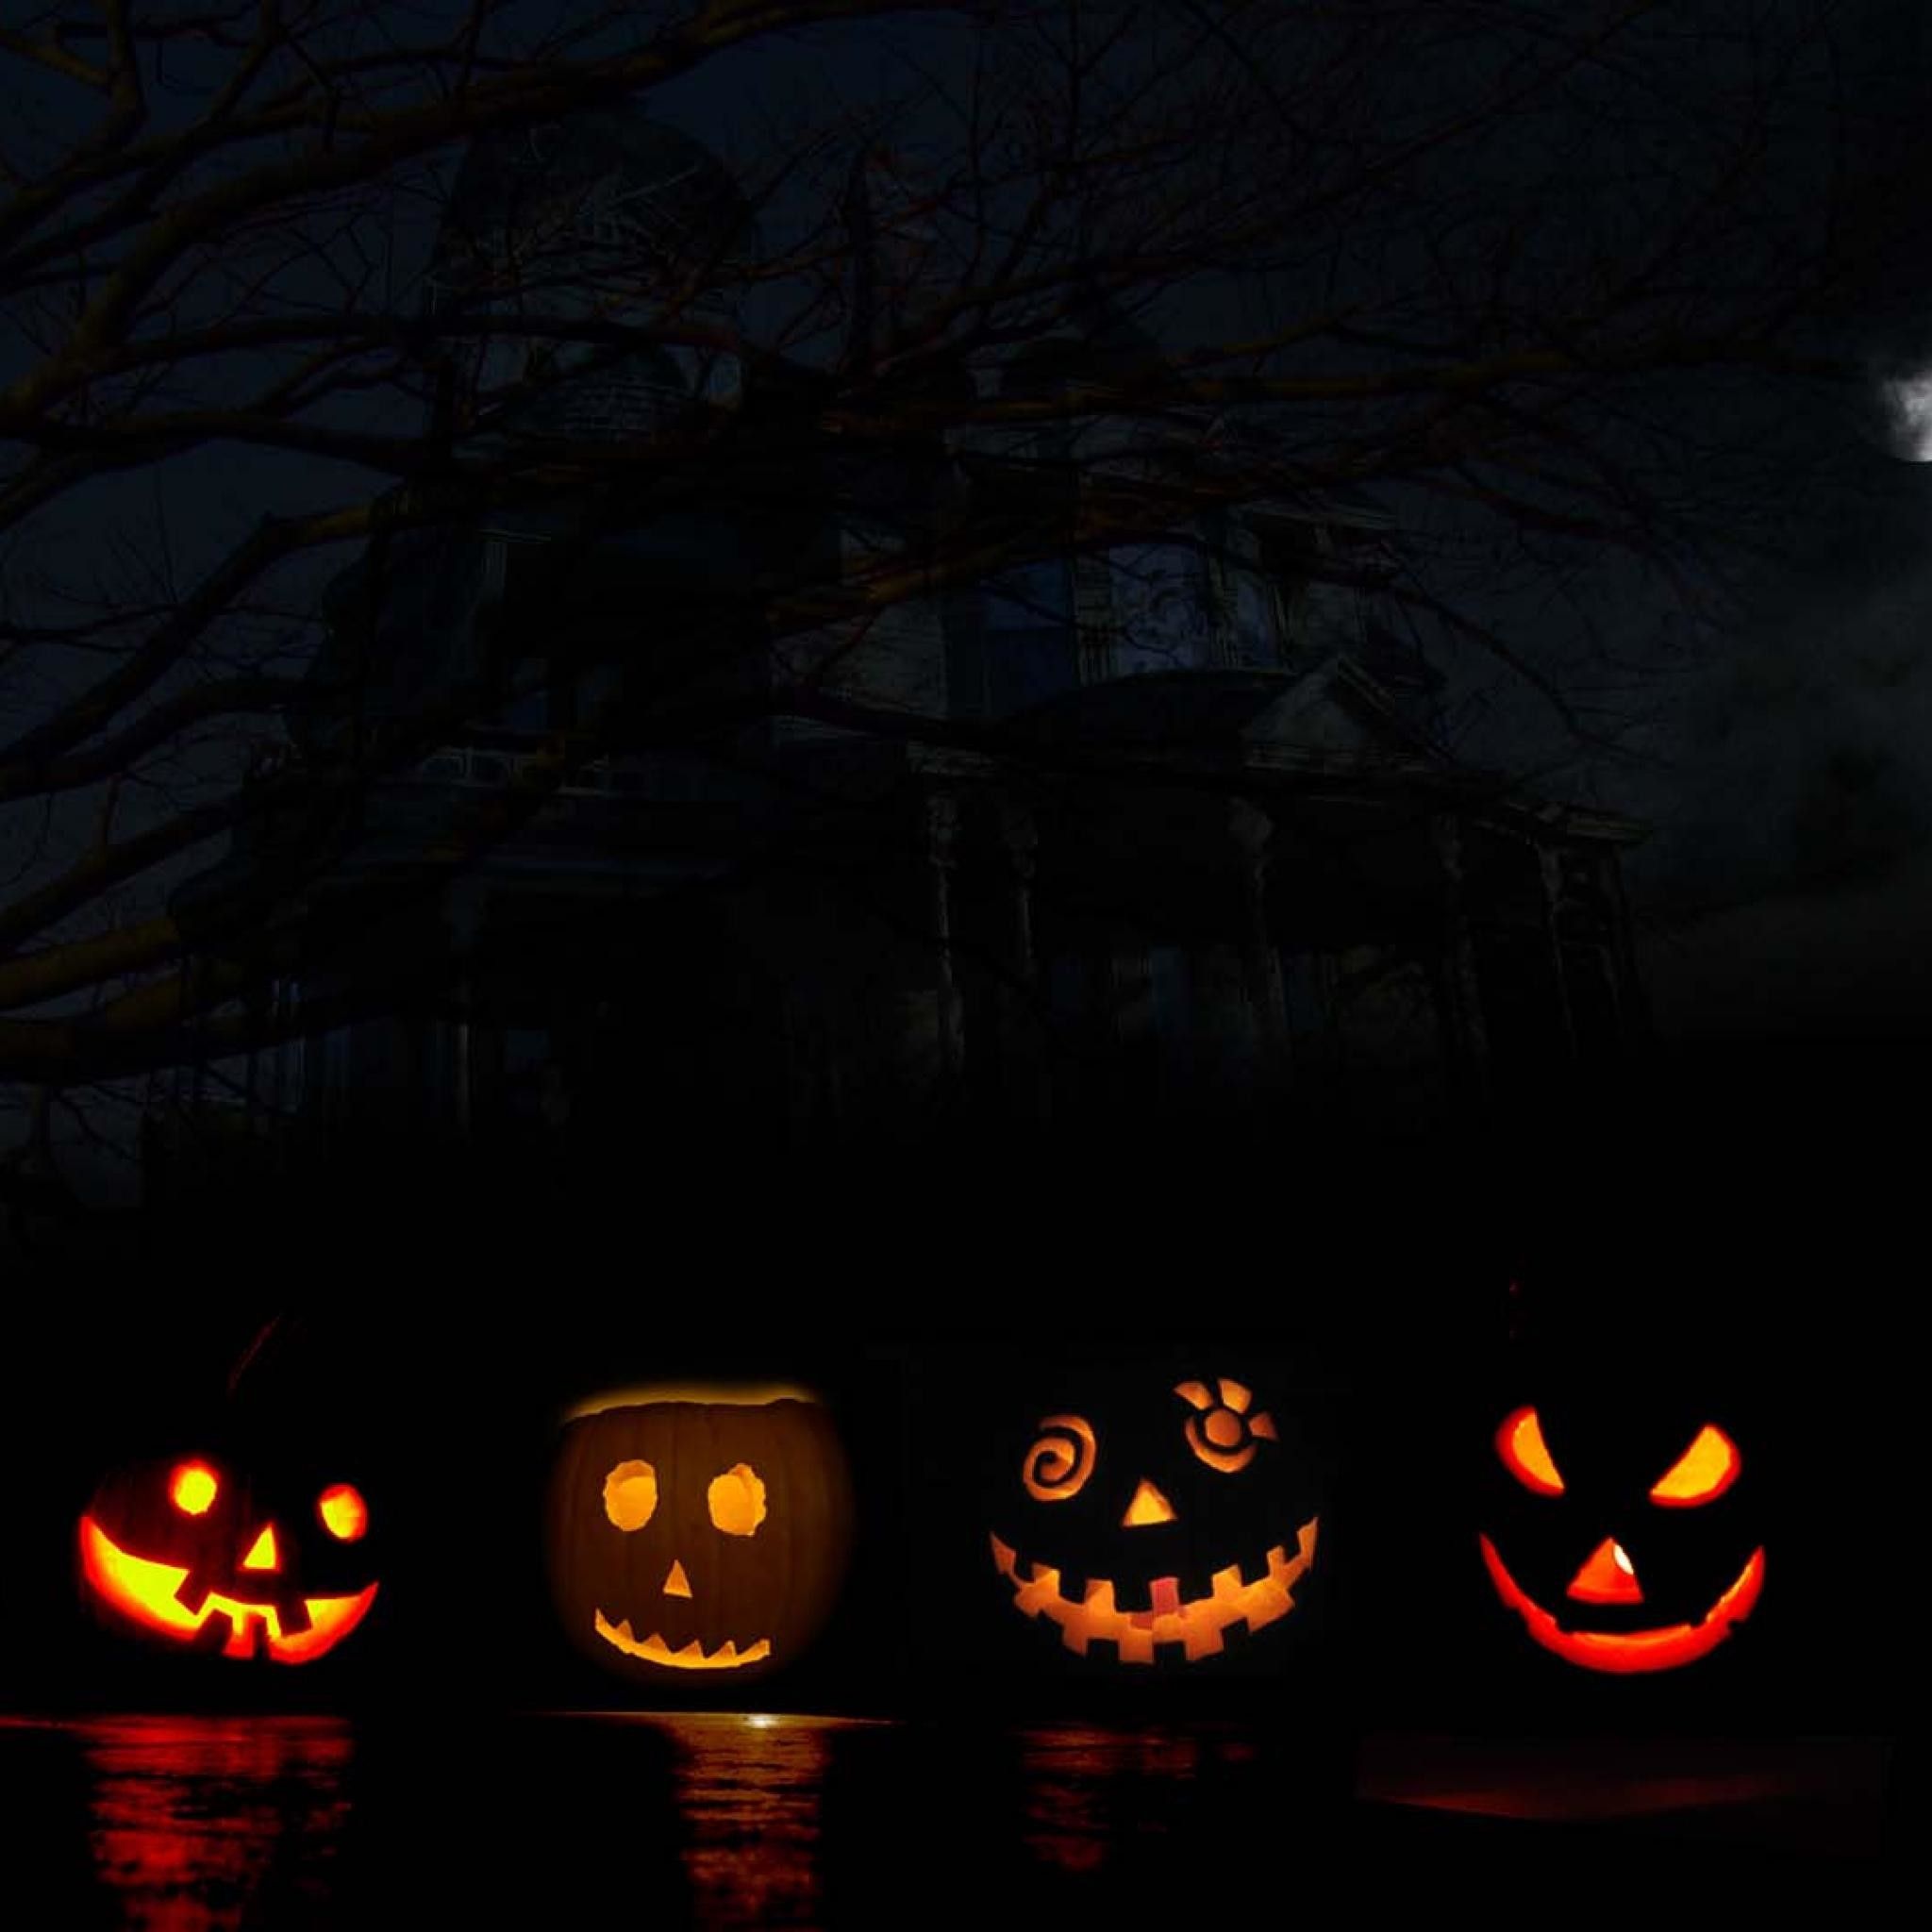 Live Photo iPhone Wallpaper. Halloween wallpaper, Scary halloween pumpkins, Halloween pumpkins carvings